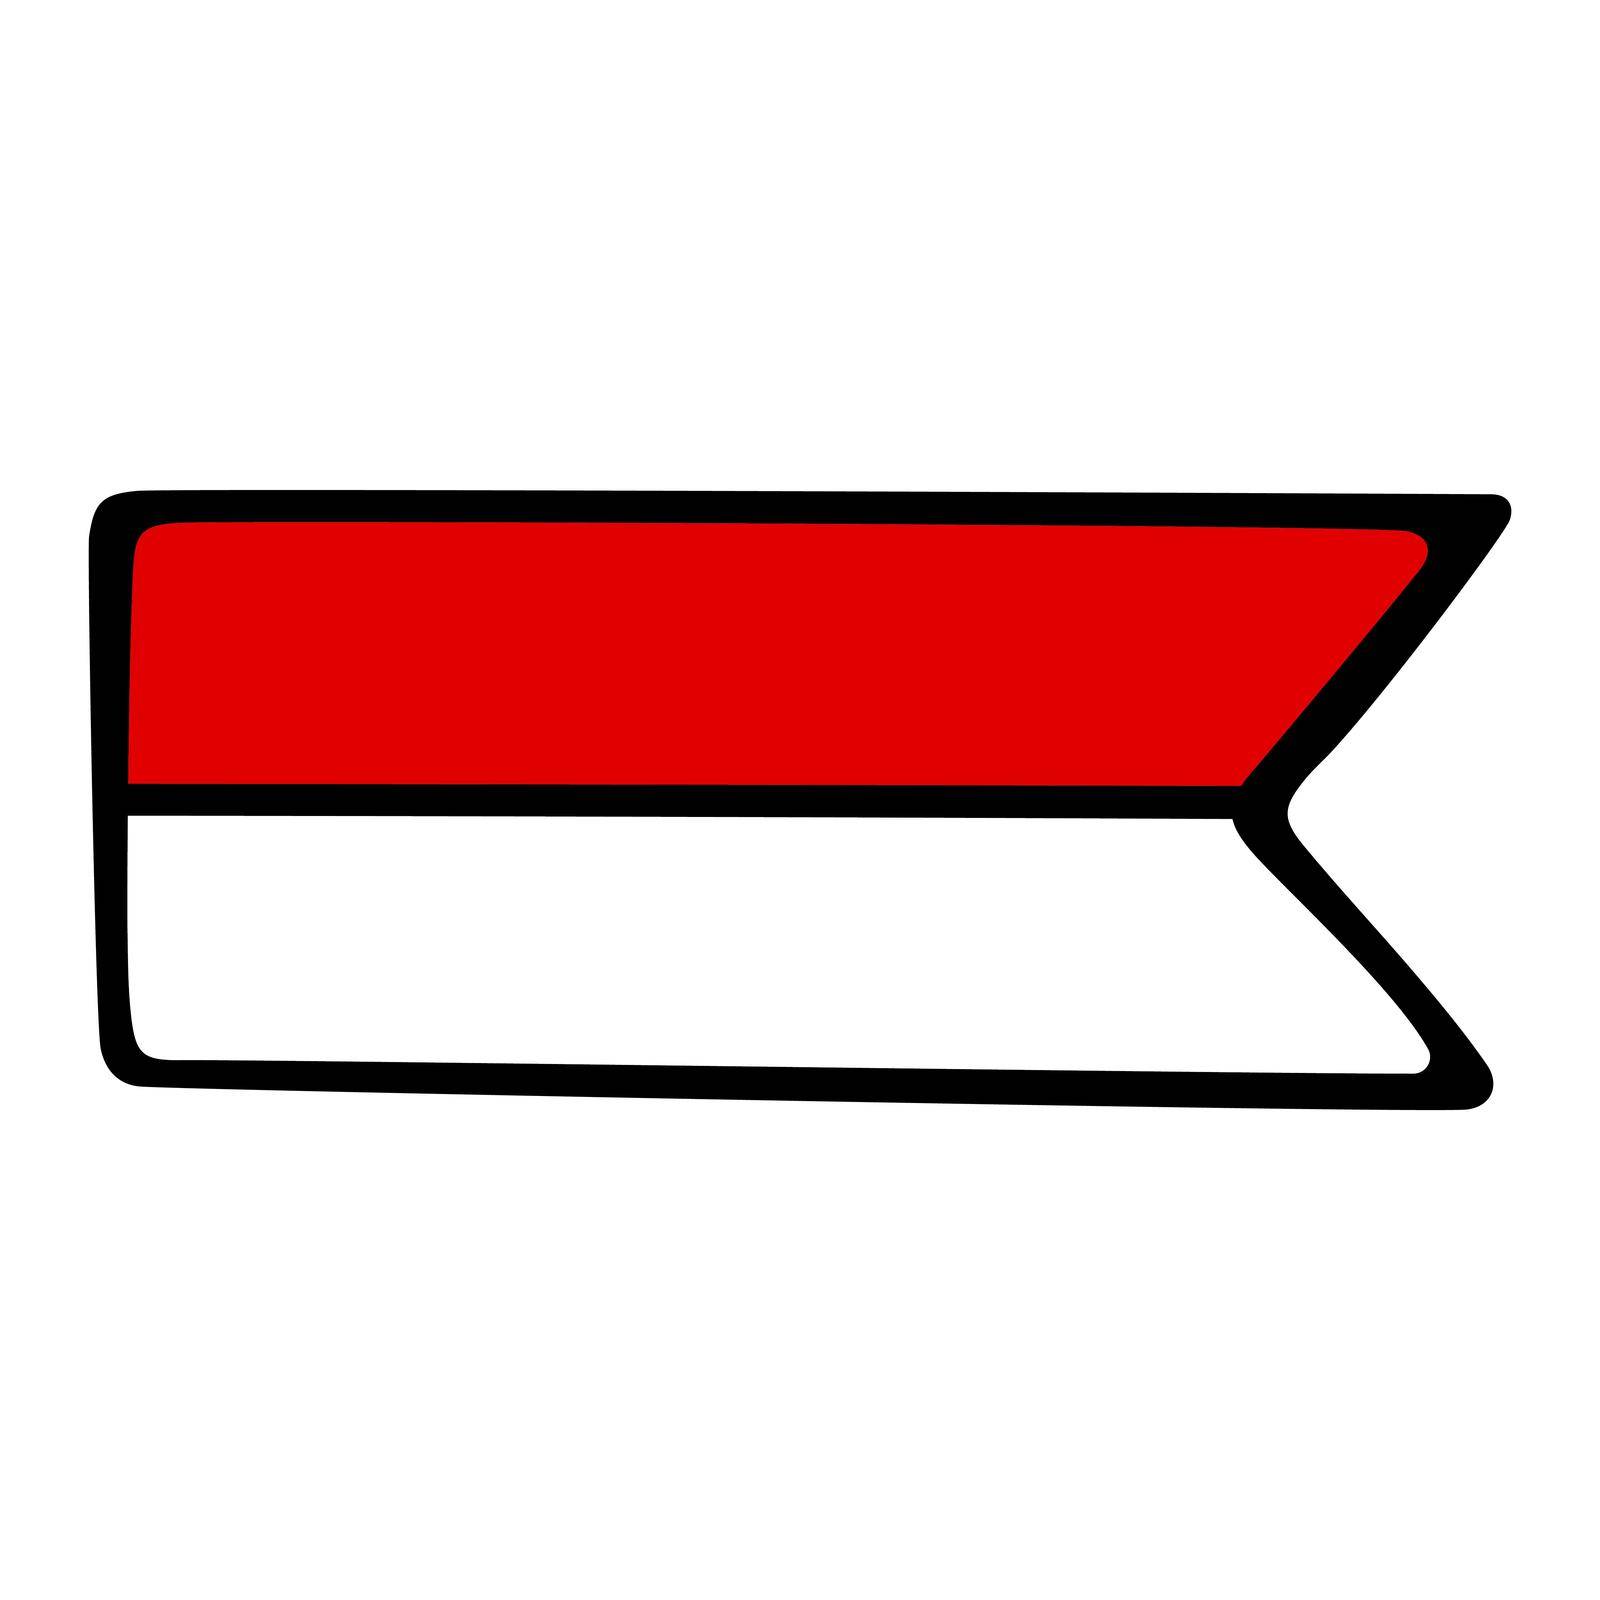 Flag of Hesse single element hand drawn isolated on white background